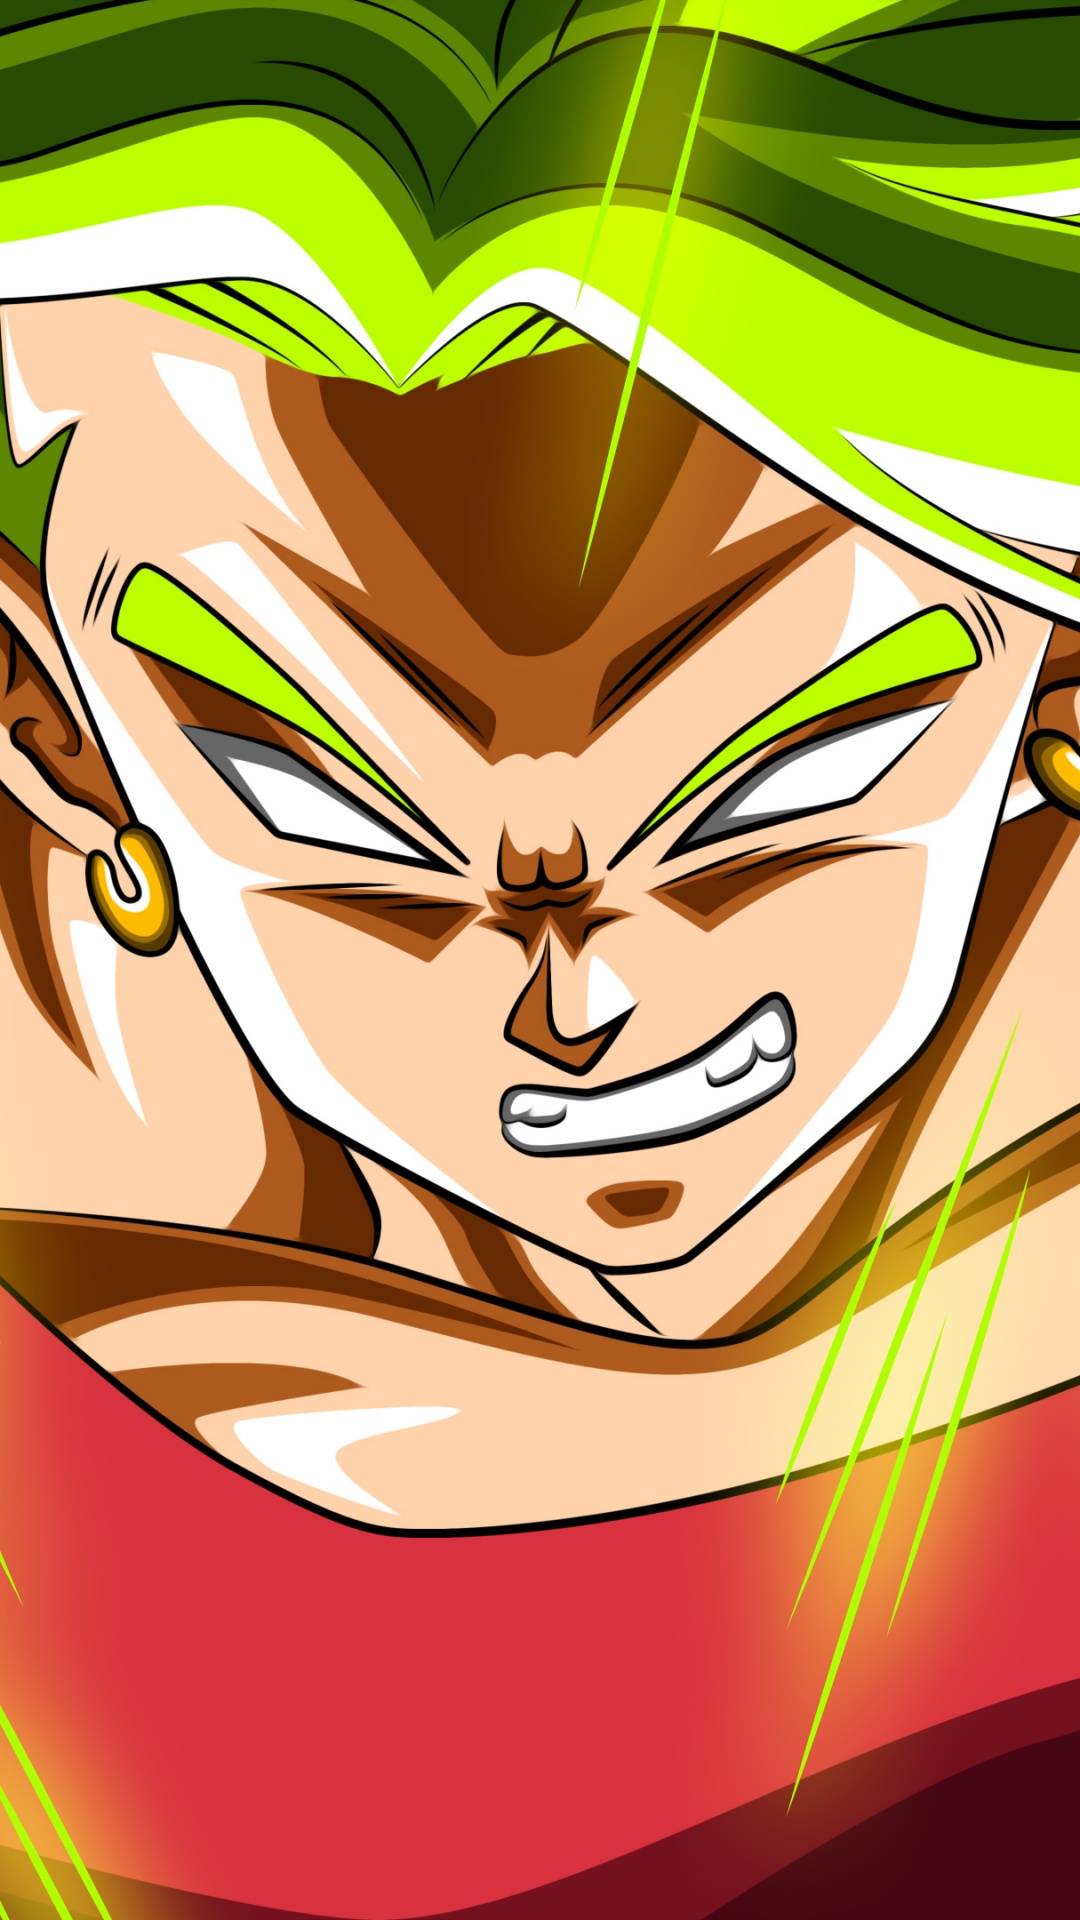 Personaje de Anime Masculino de Pelo Verde y Rojo. Wallpaper in 1080x1920 Resolution